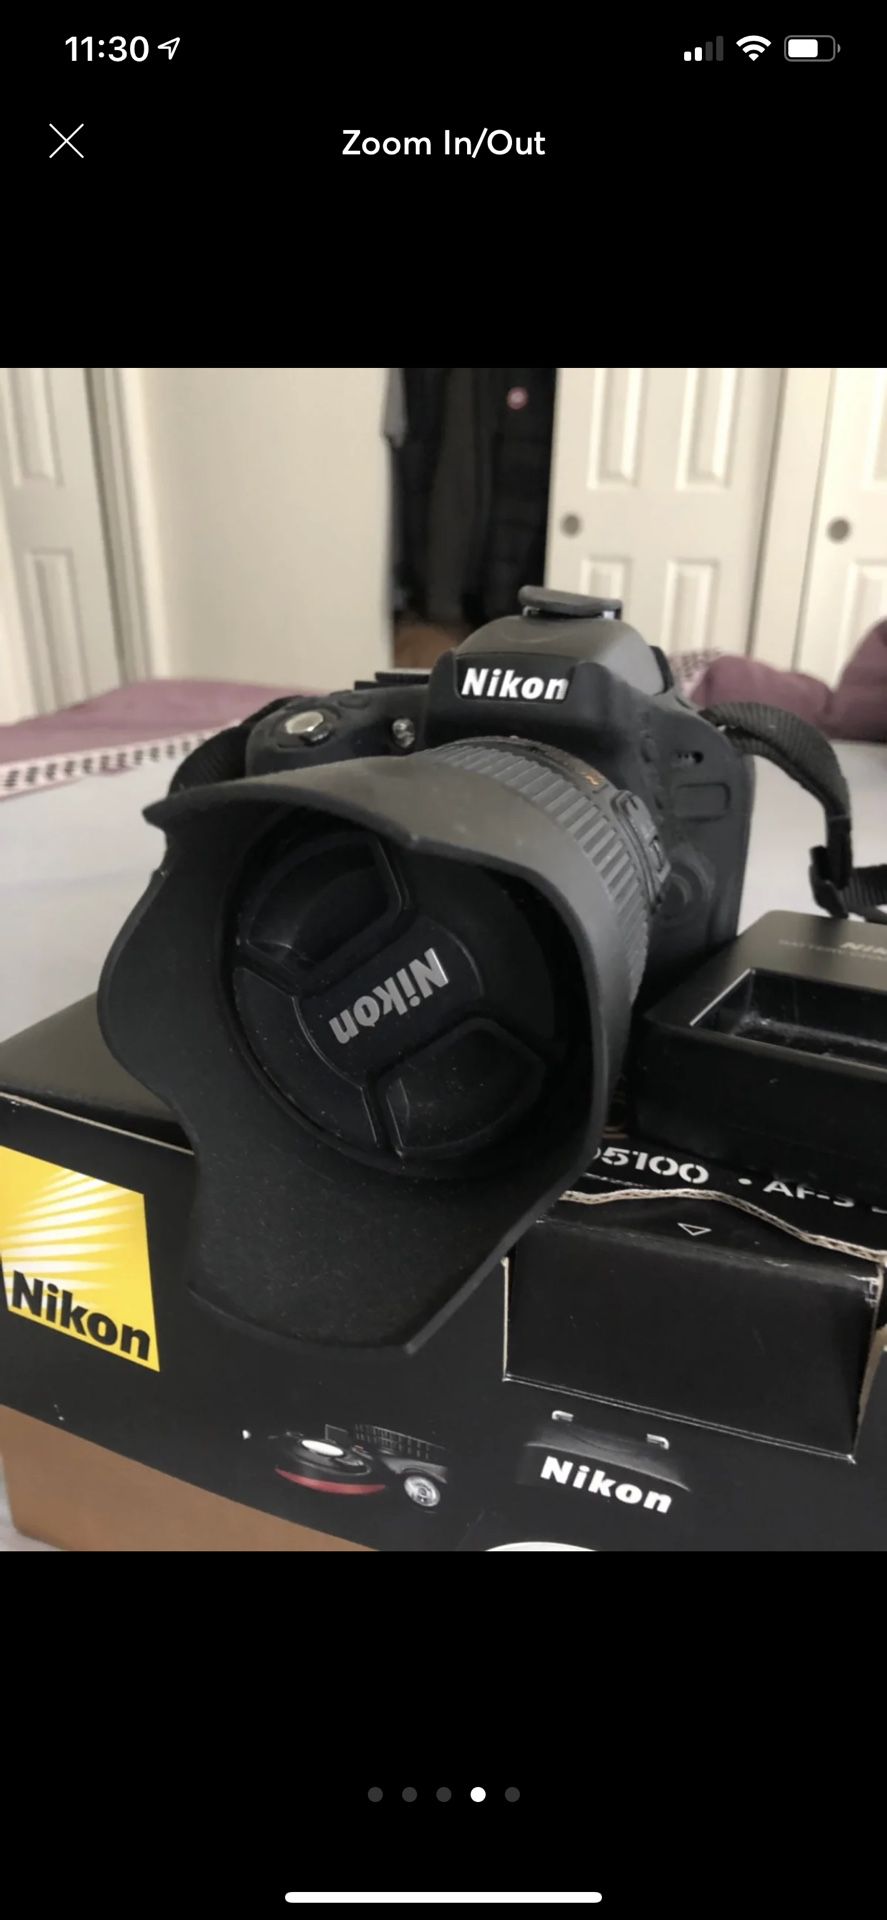 Nikon 5100 with extra lens